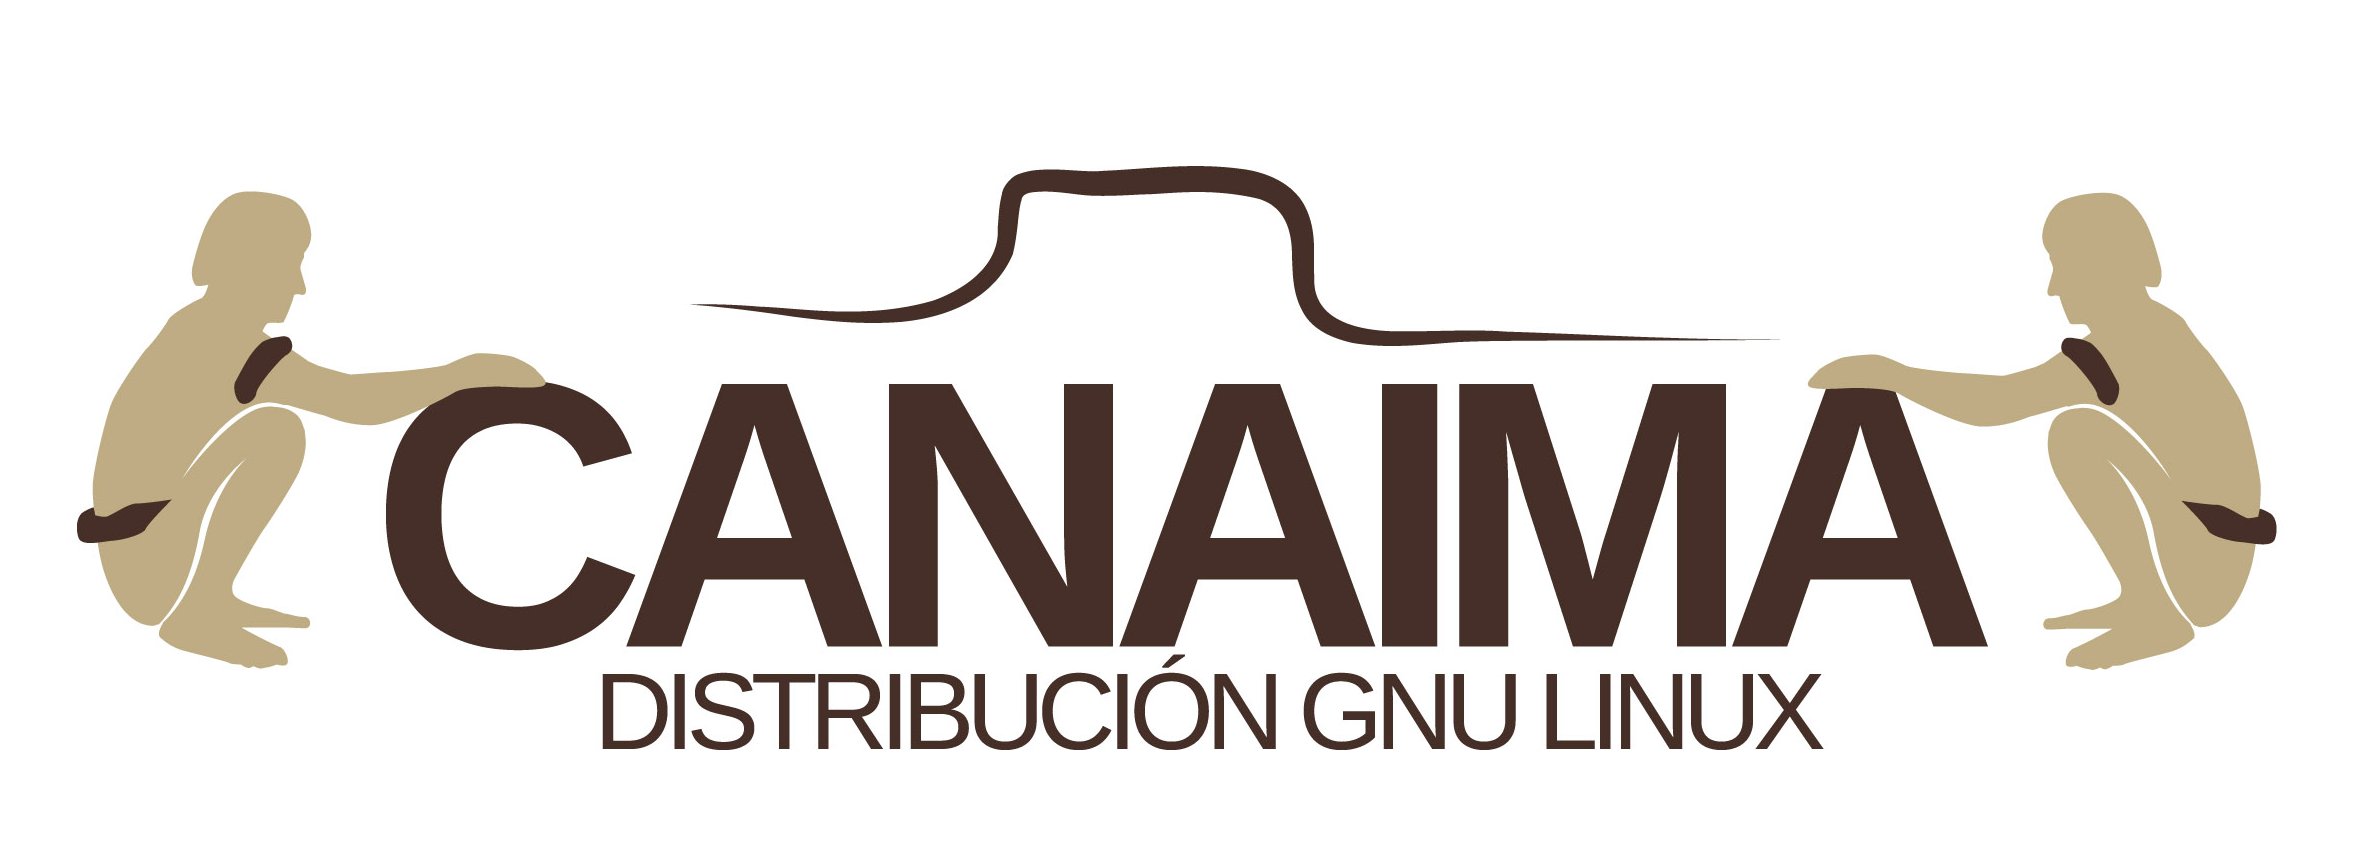 GNU Linux Canaima Venezuela Logo photo - 1